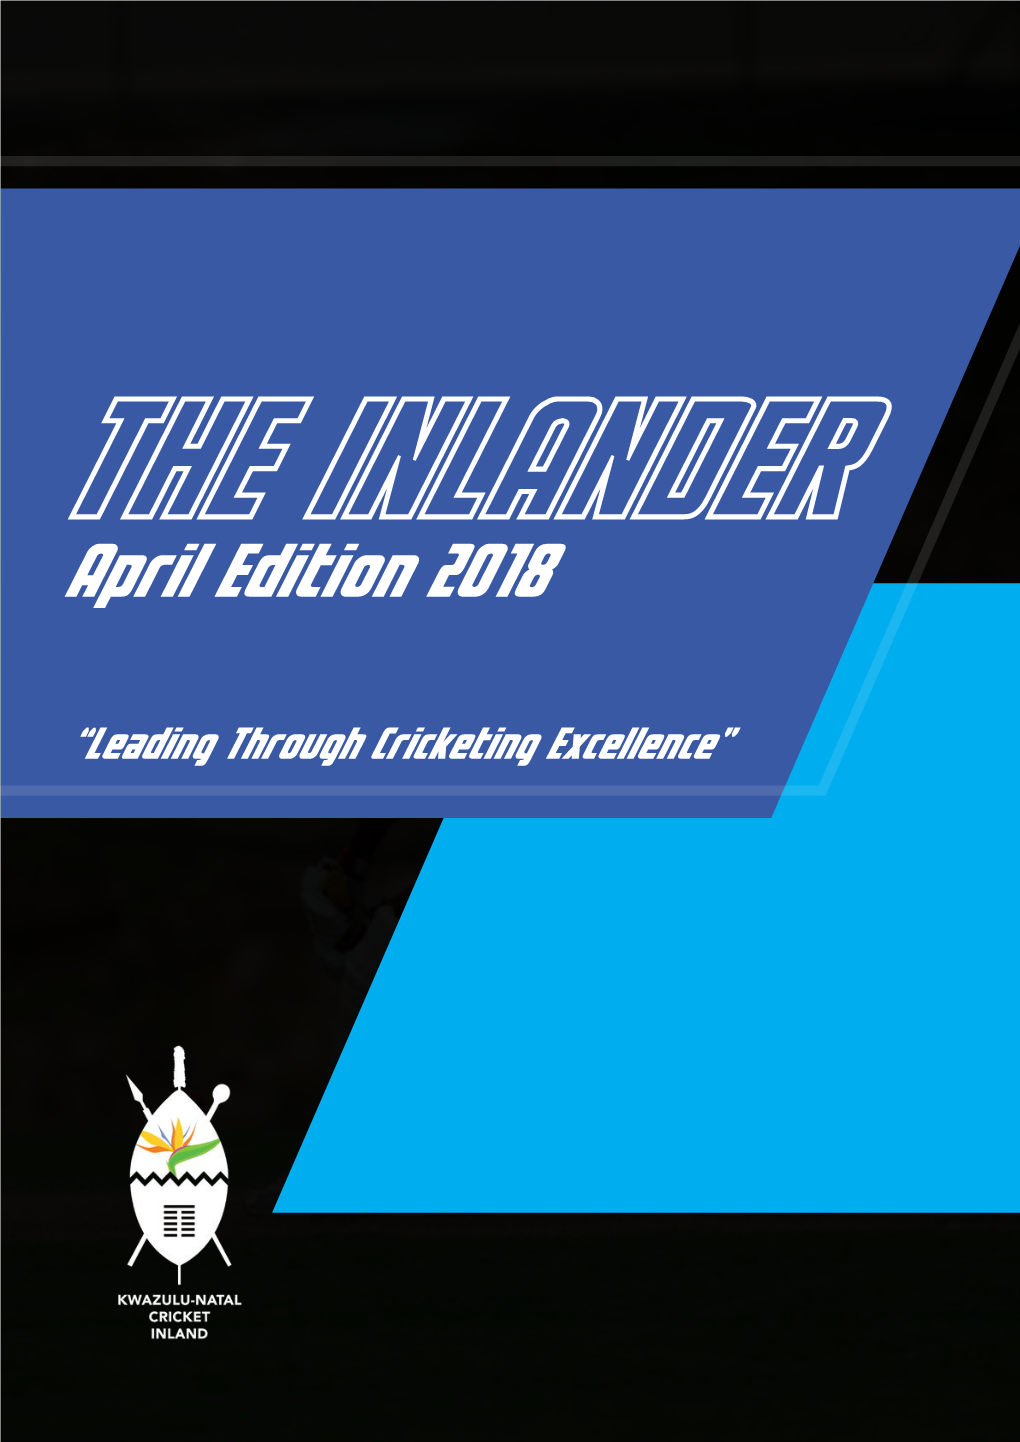 April Edition 2018